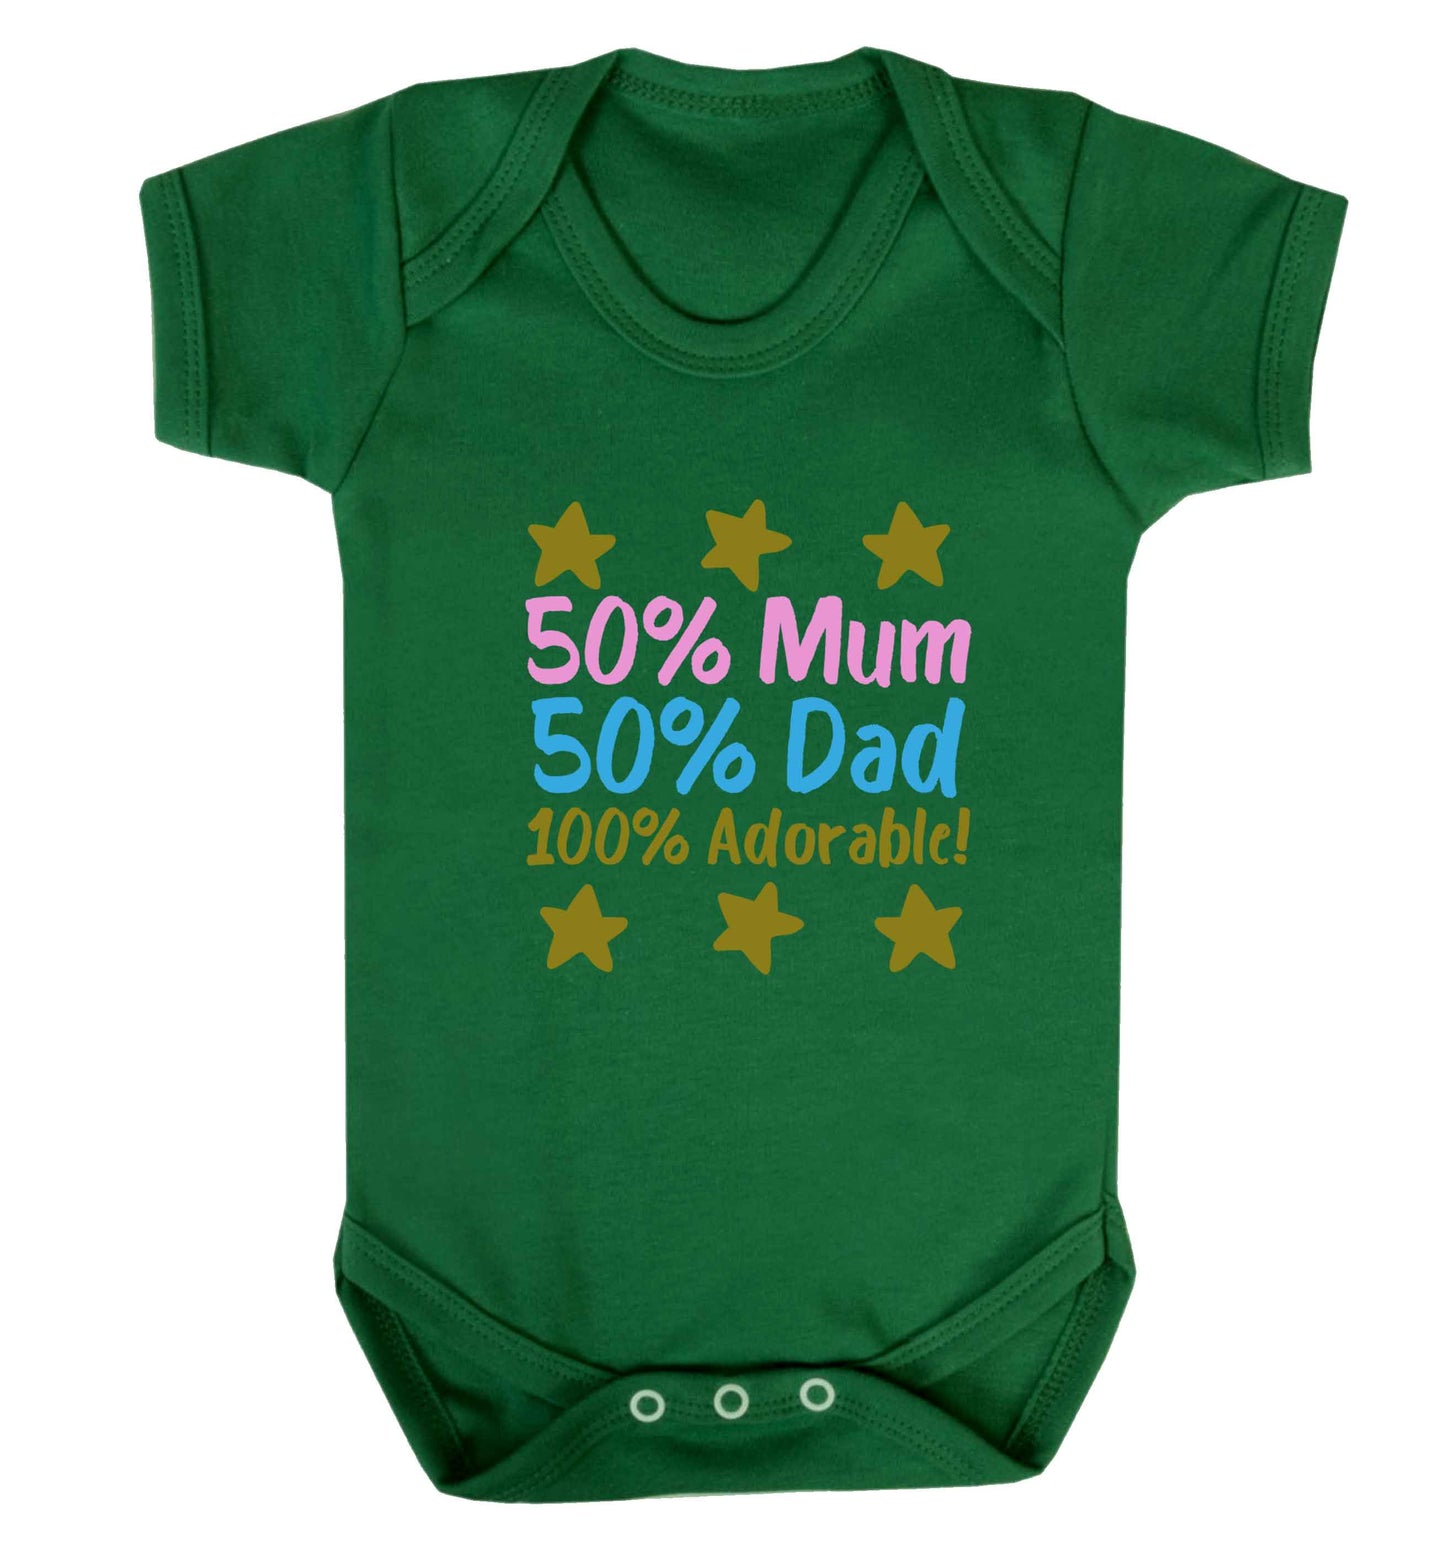 50% mum 50% dad 100% adorable baby vest green 18-24 months